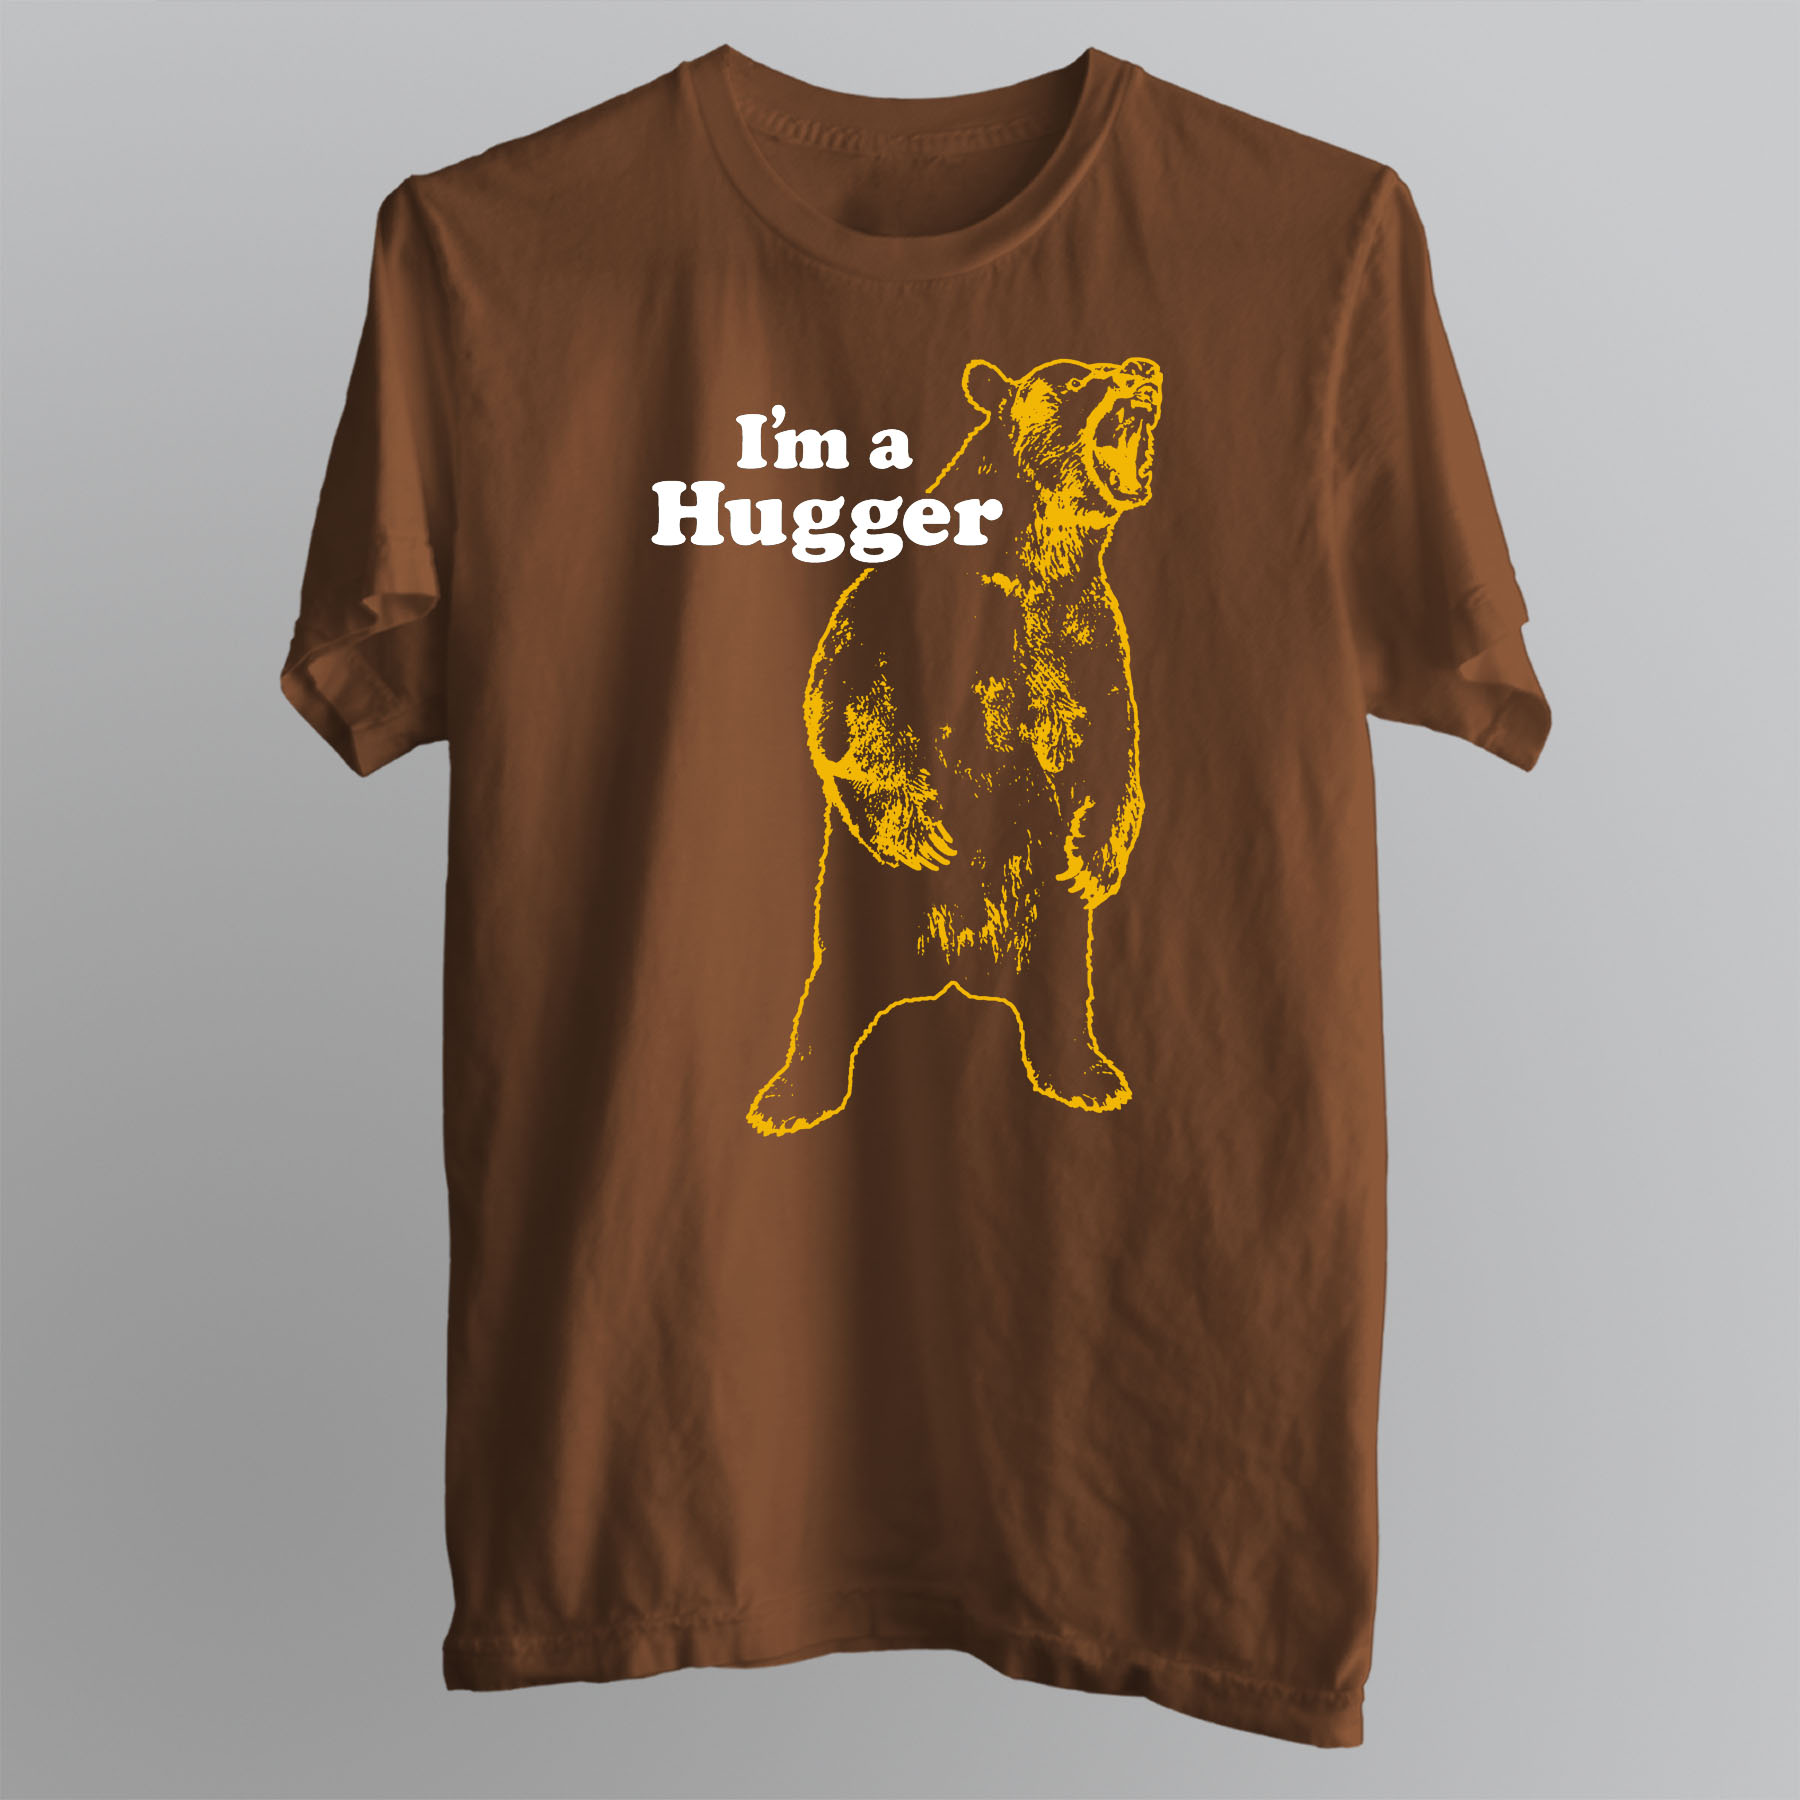 Men's Graphic T-Shirt - I'm a Hugger